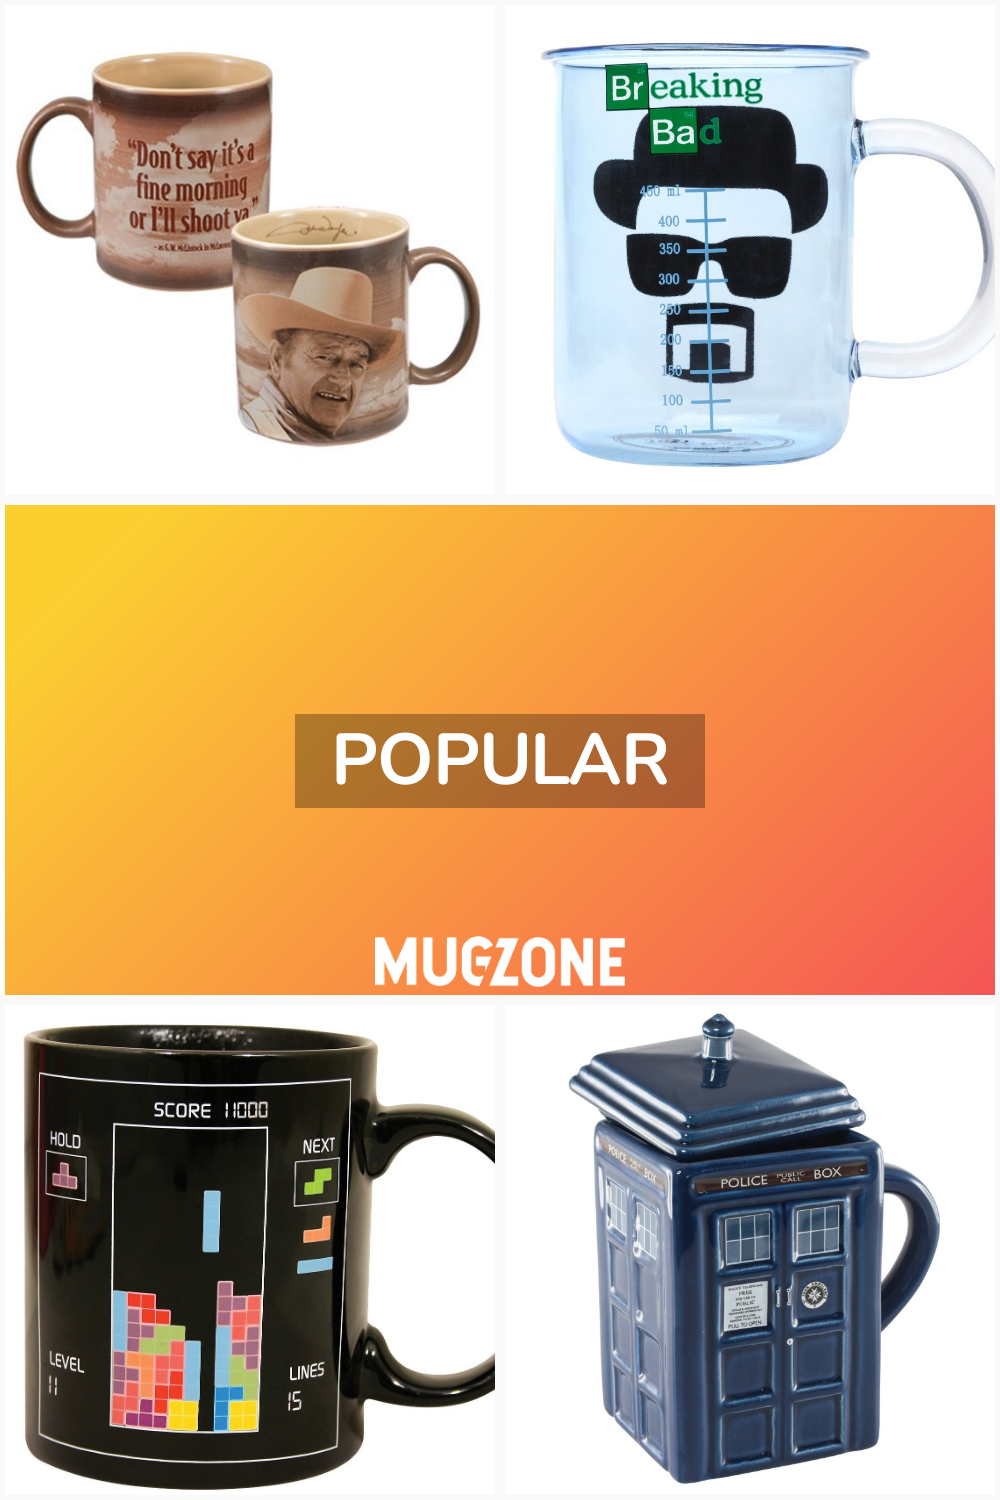 popular // Mug Zone